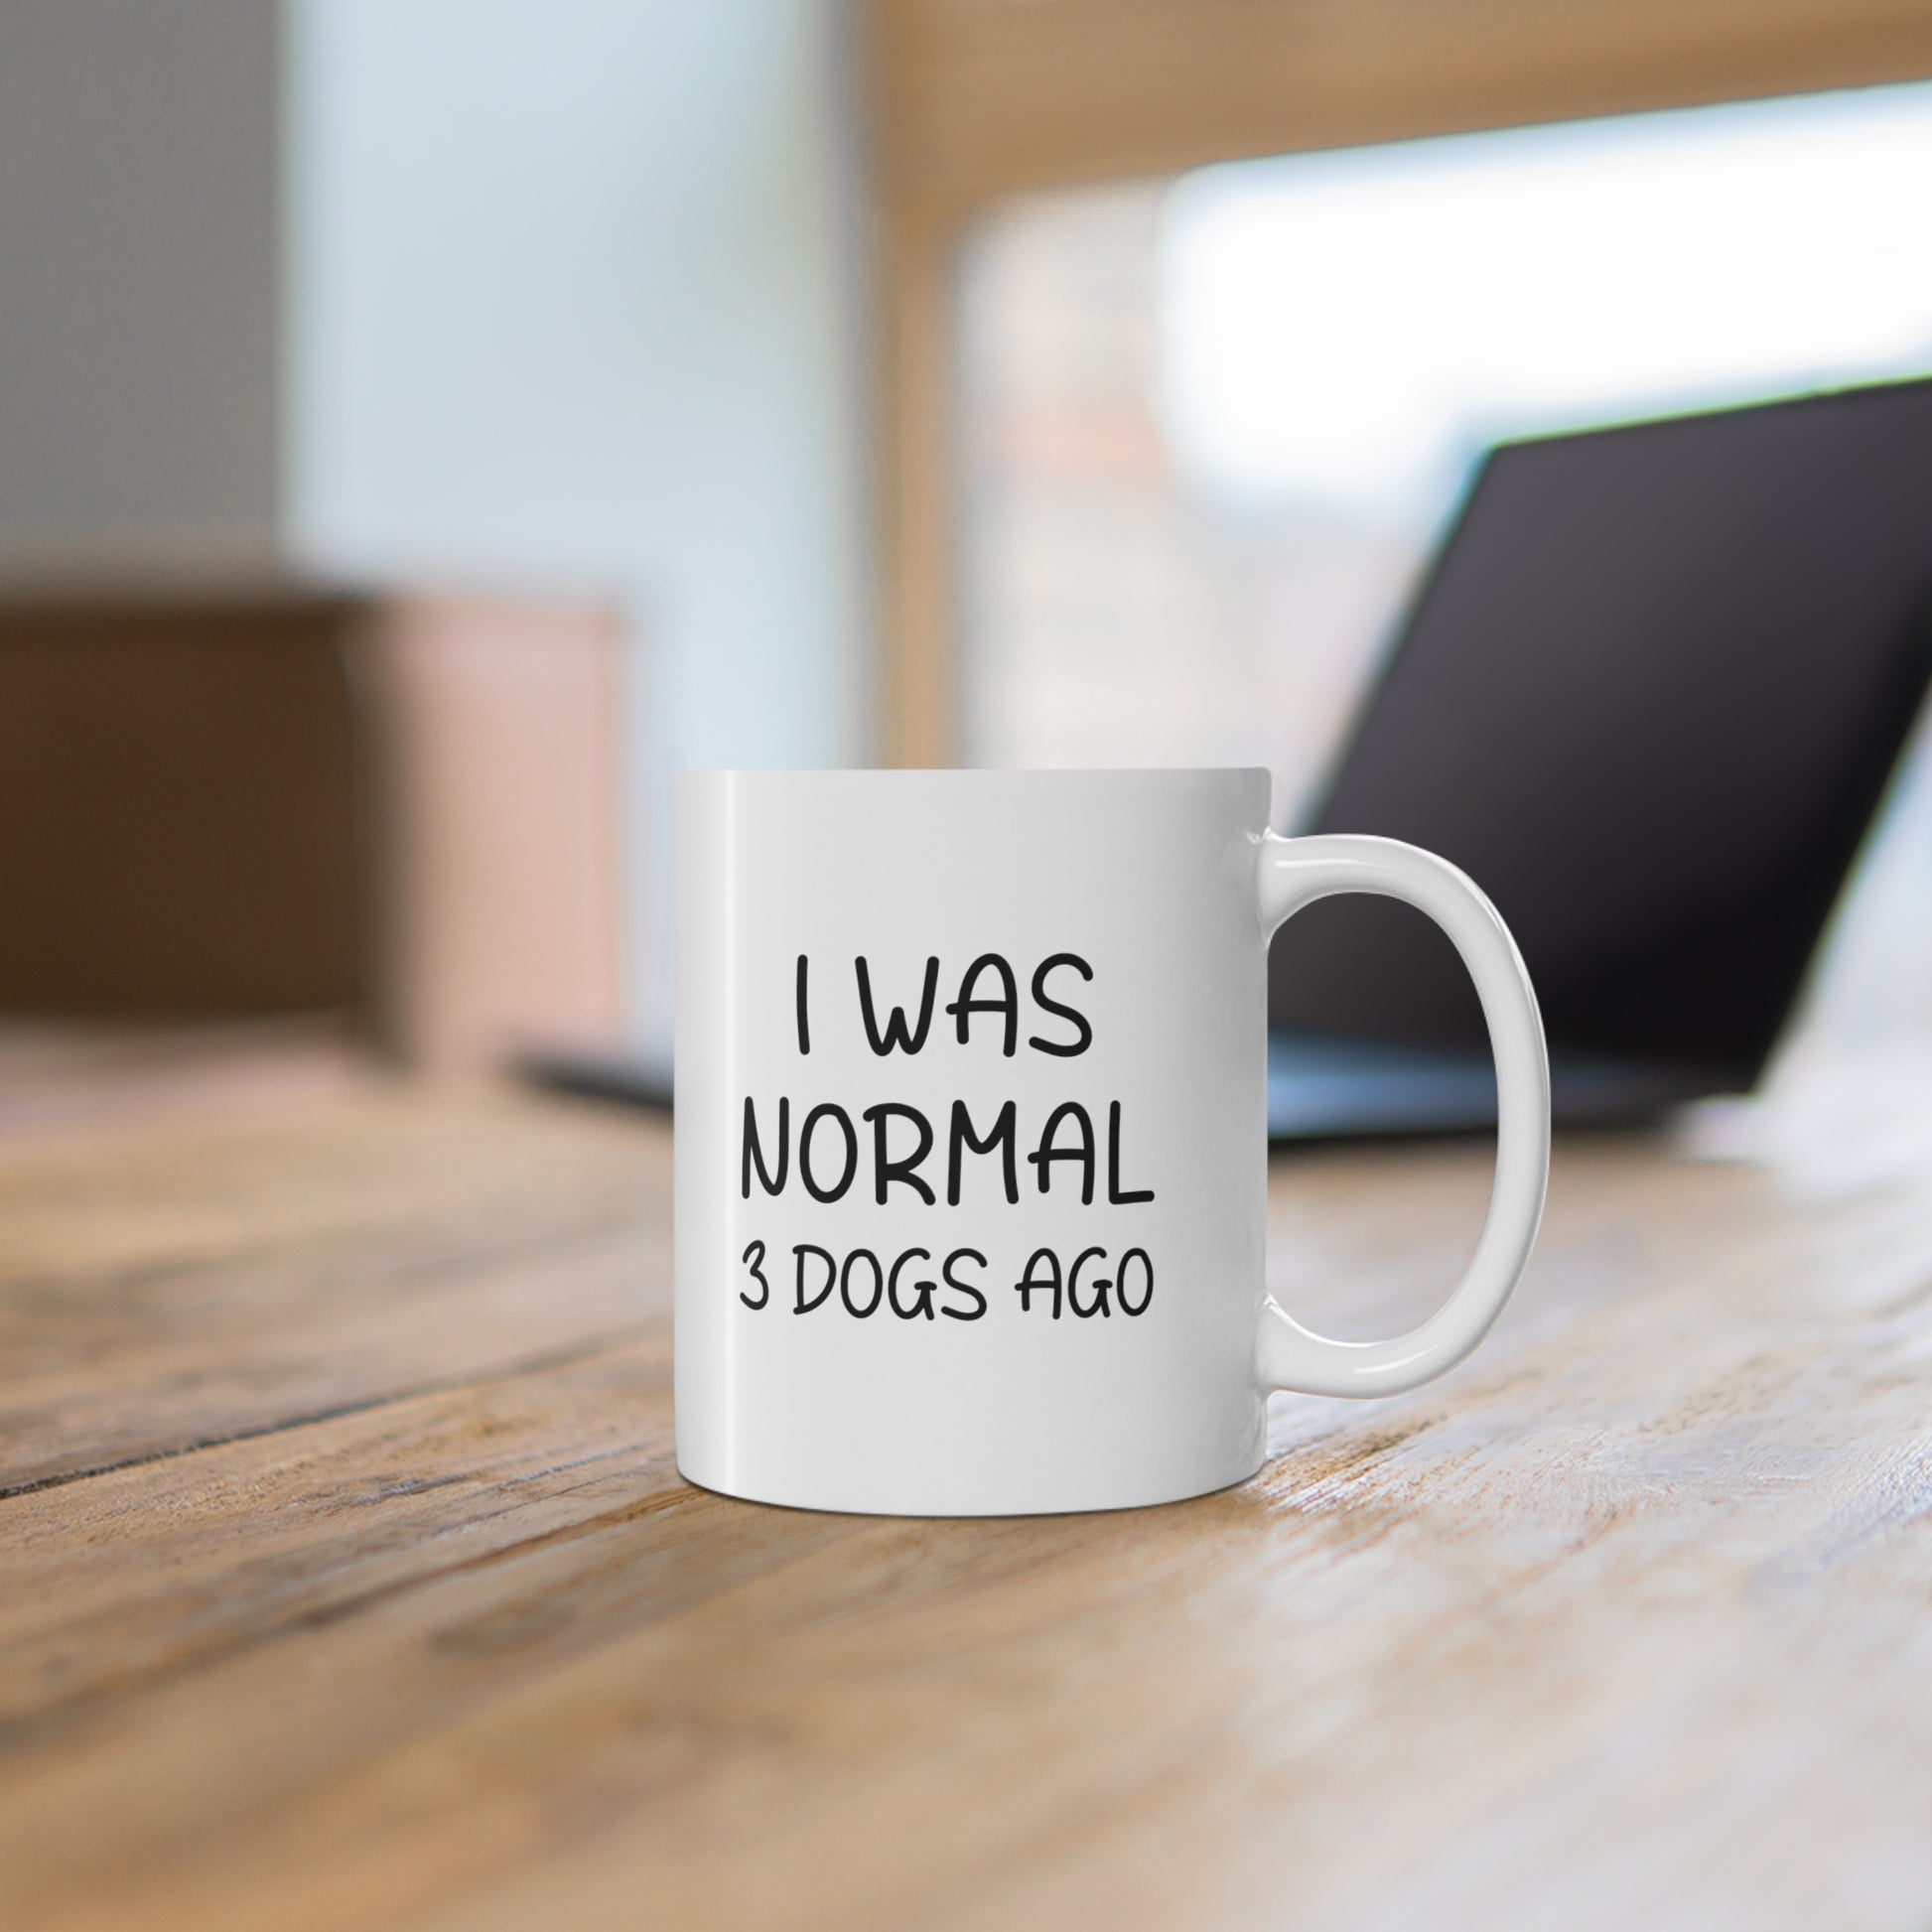 11oz ceramic mug with quote I Was Normal 3 Dogs Ago